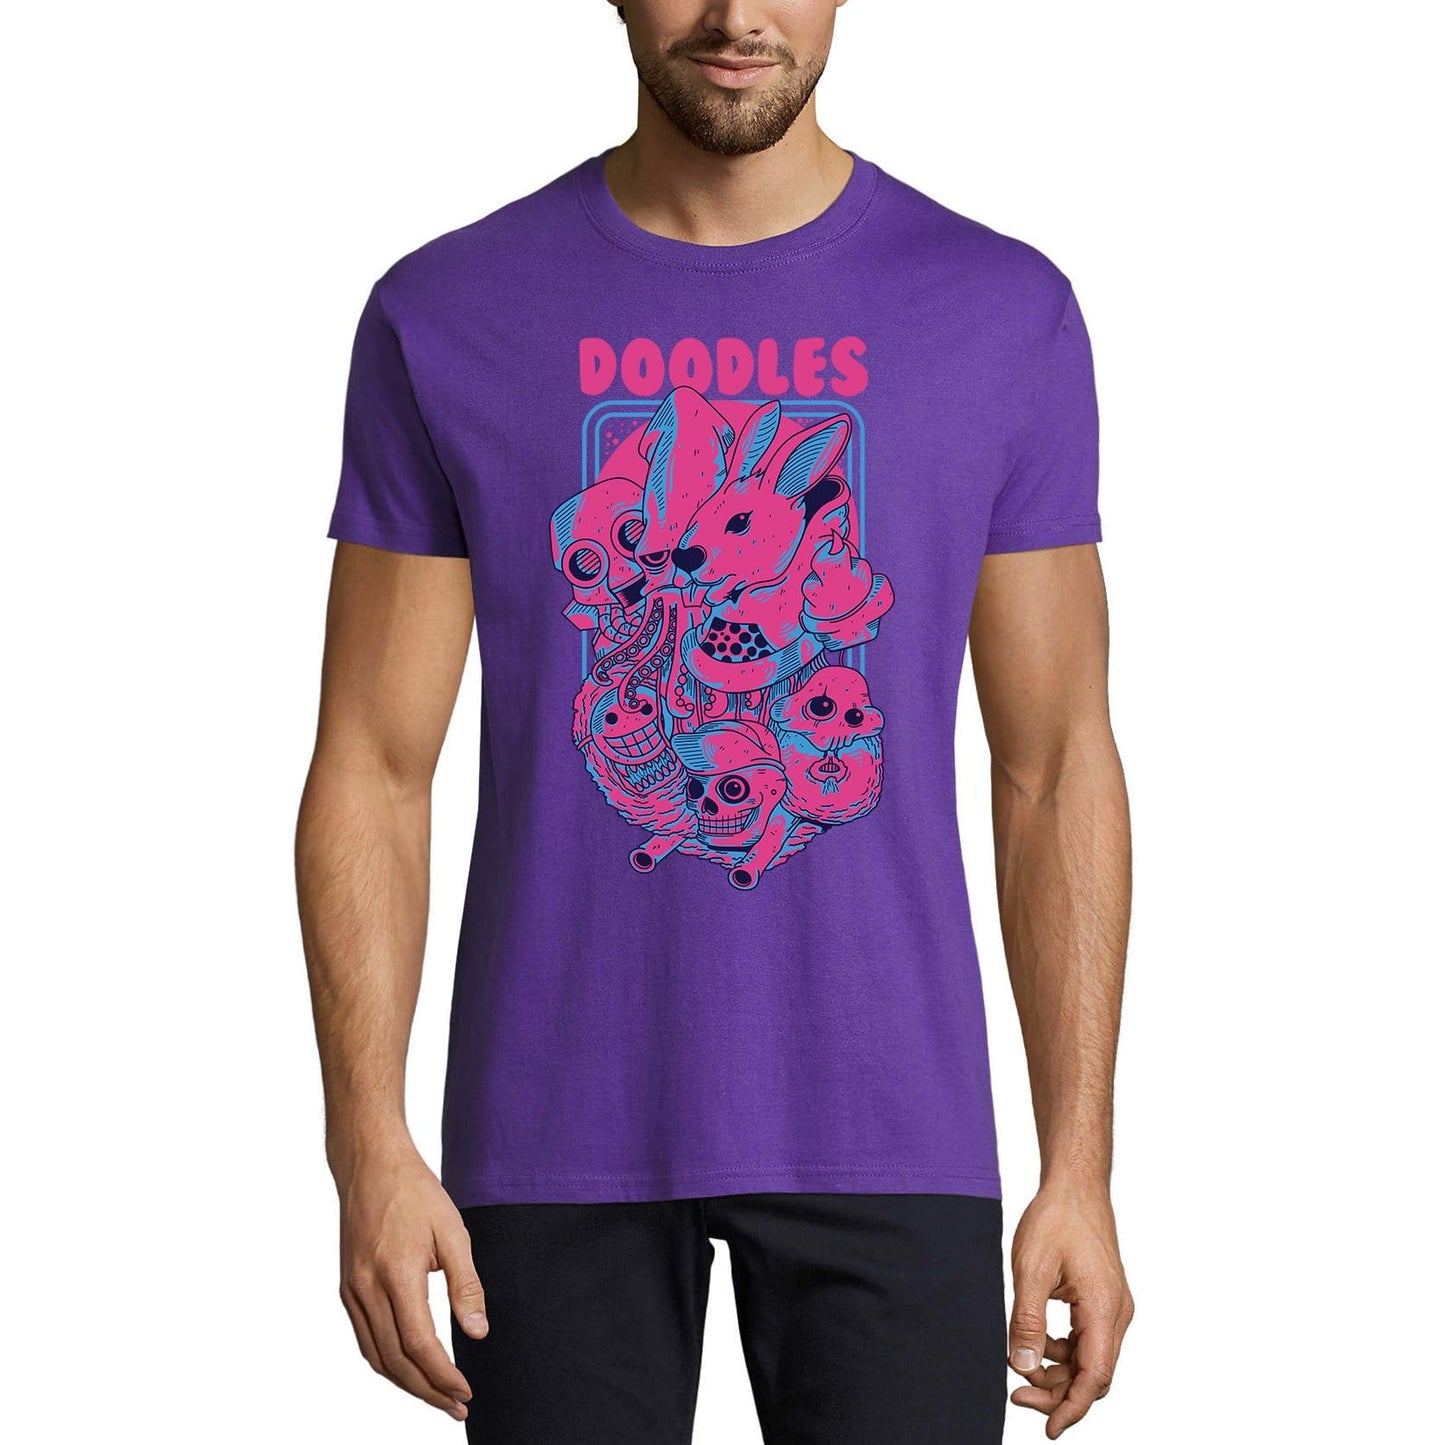 ULTRABASIC Men's Novelty T-Shirt Doodles Tee Shirt - Scary Animal Tee Shirt